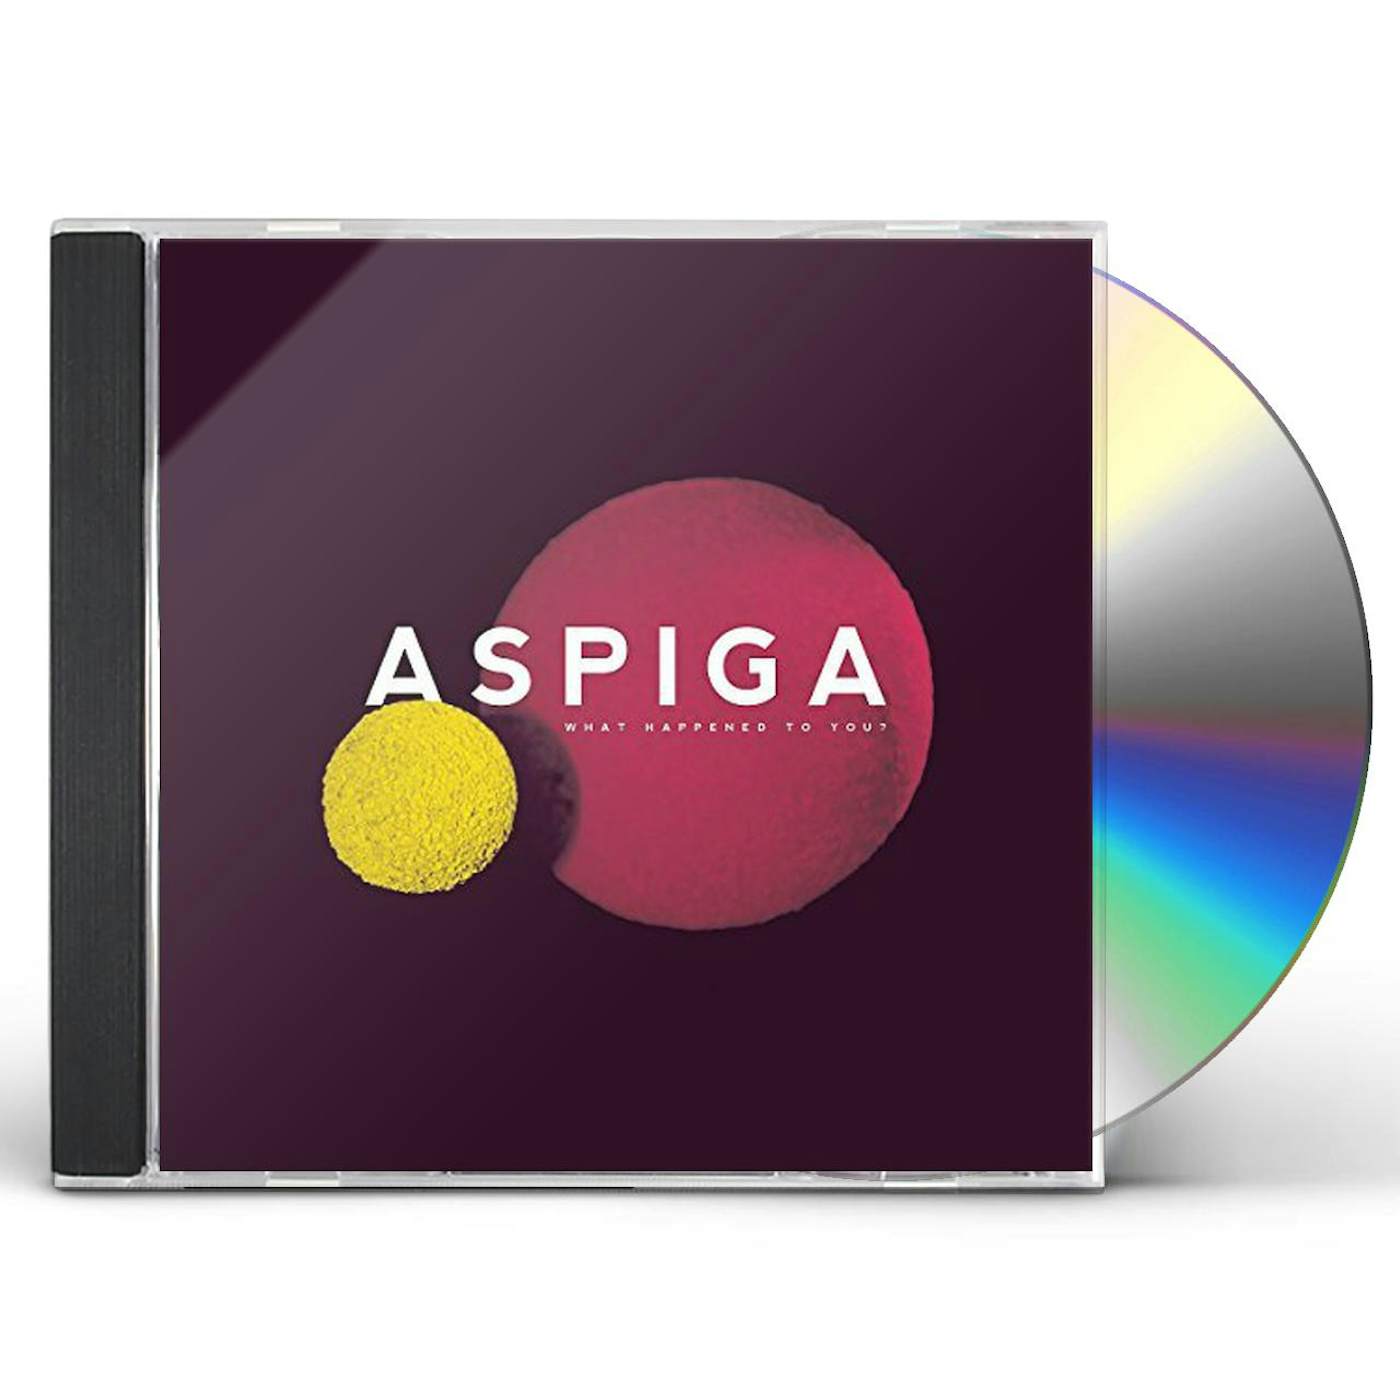 Aspiga WHAT HAPPENED TO YOU CD